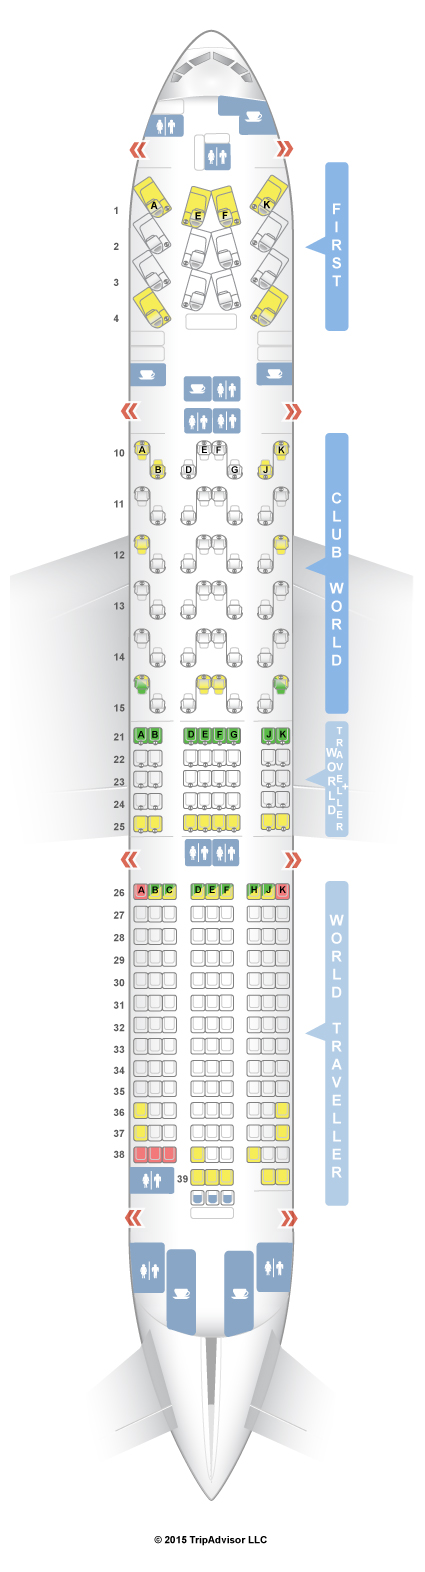 United Boeing 777 Seating Chart International